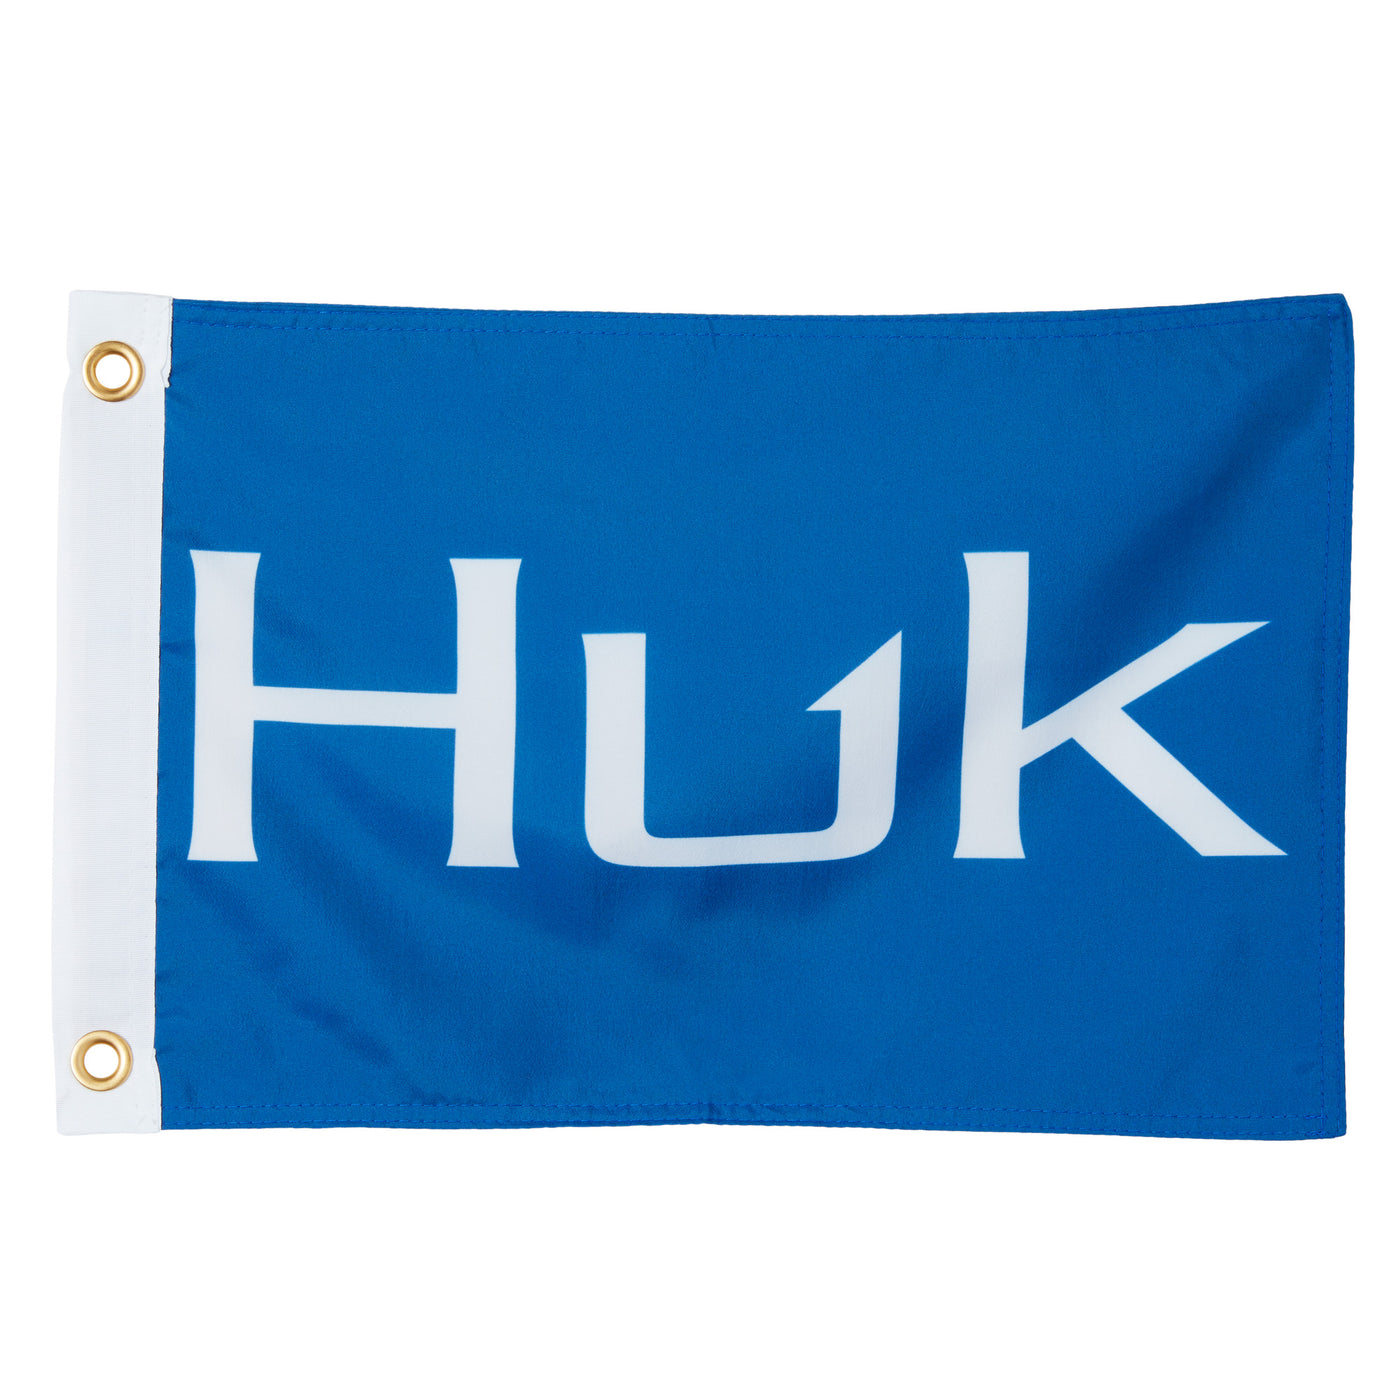 Huk Boat Flag